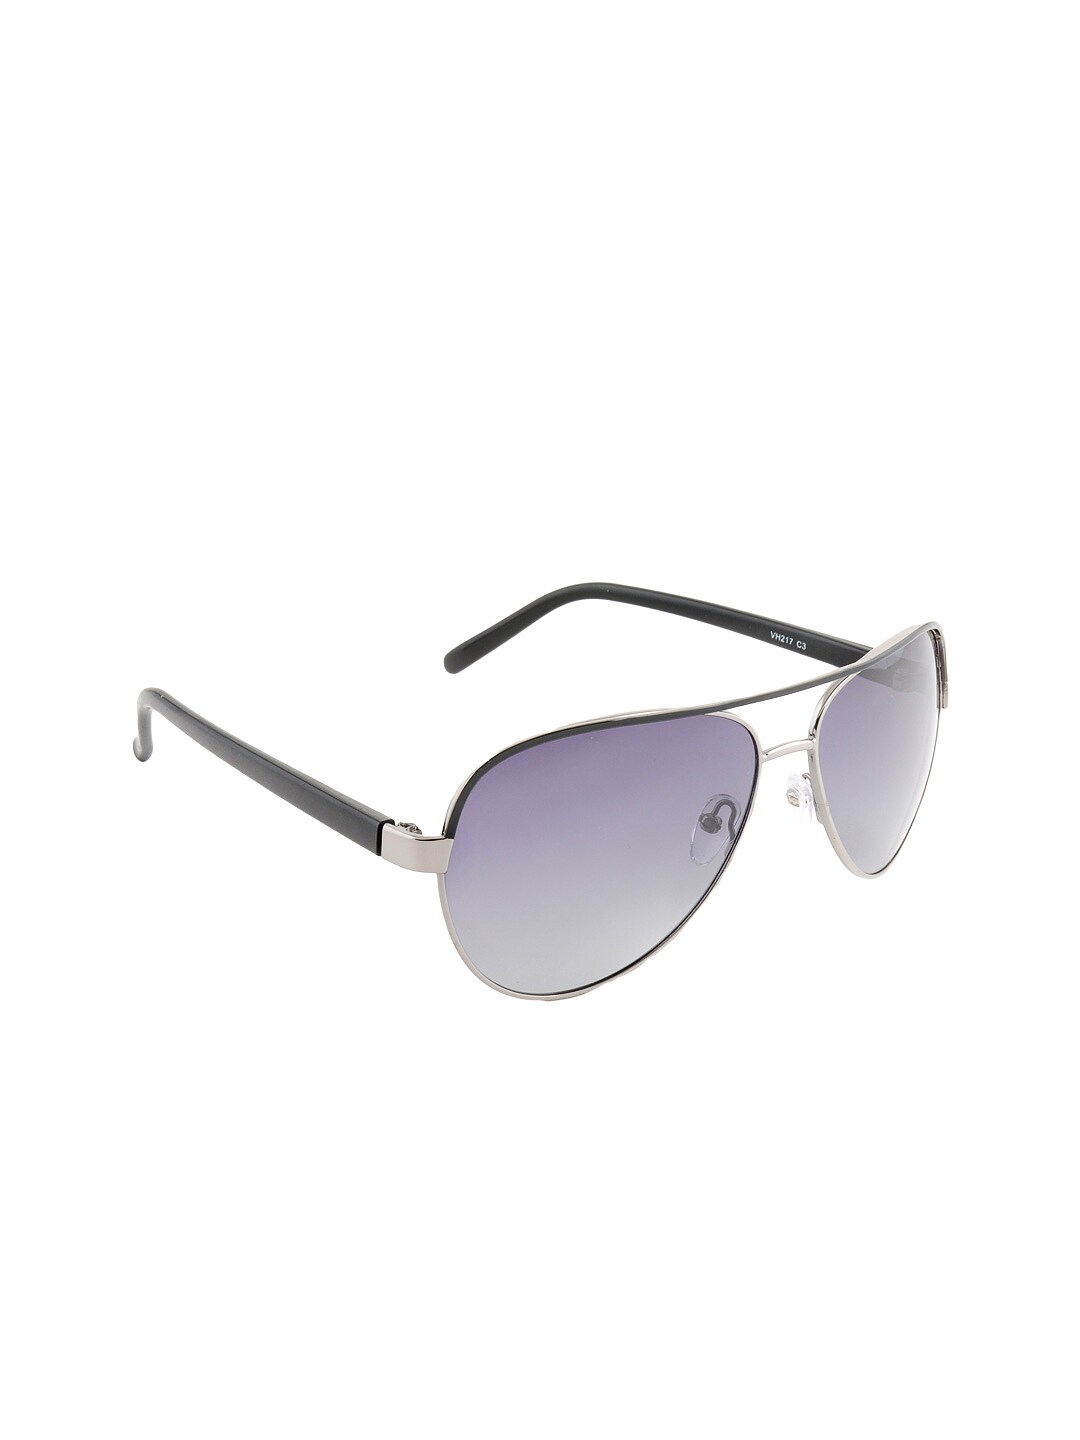 Van Heusen Unisex Grey Aviator Sunglasses VH217-C